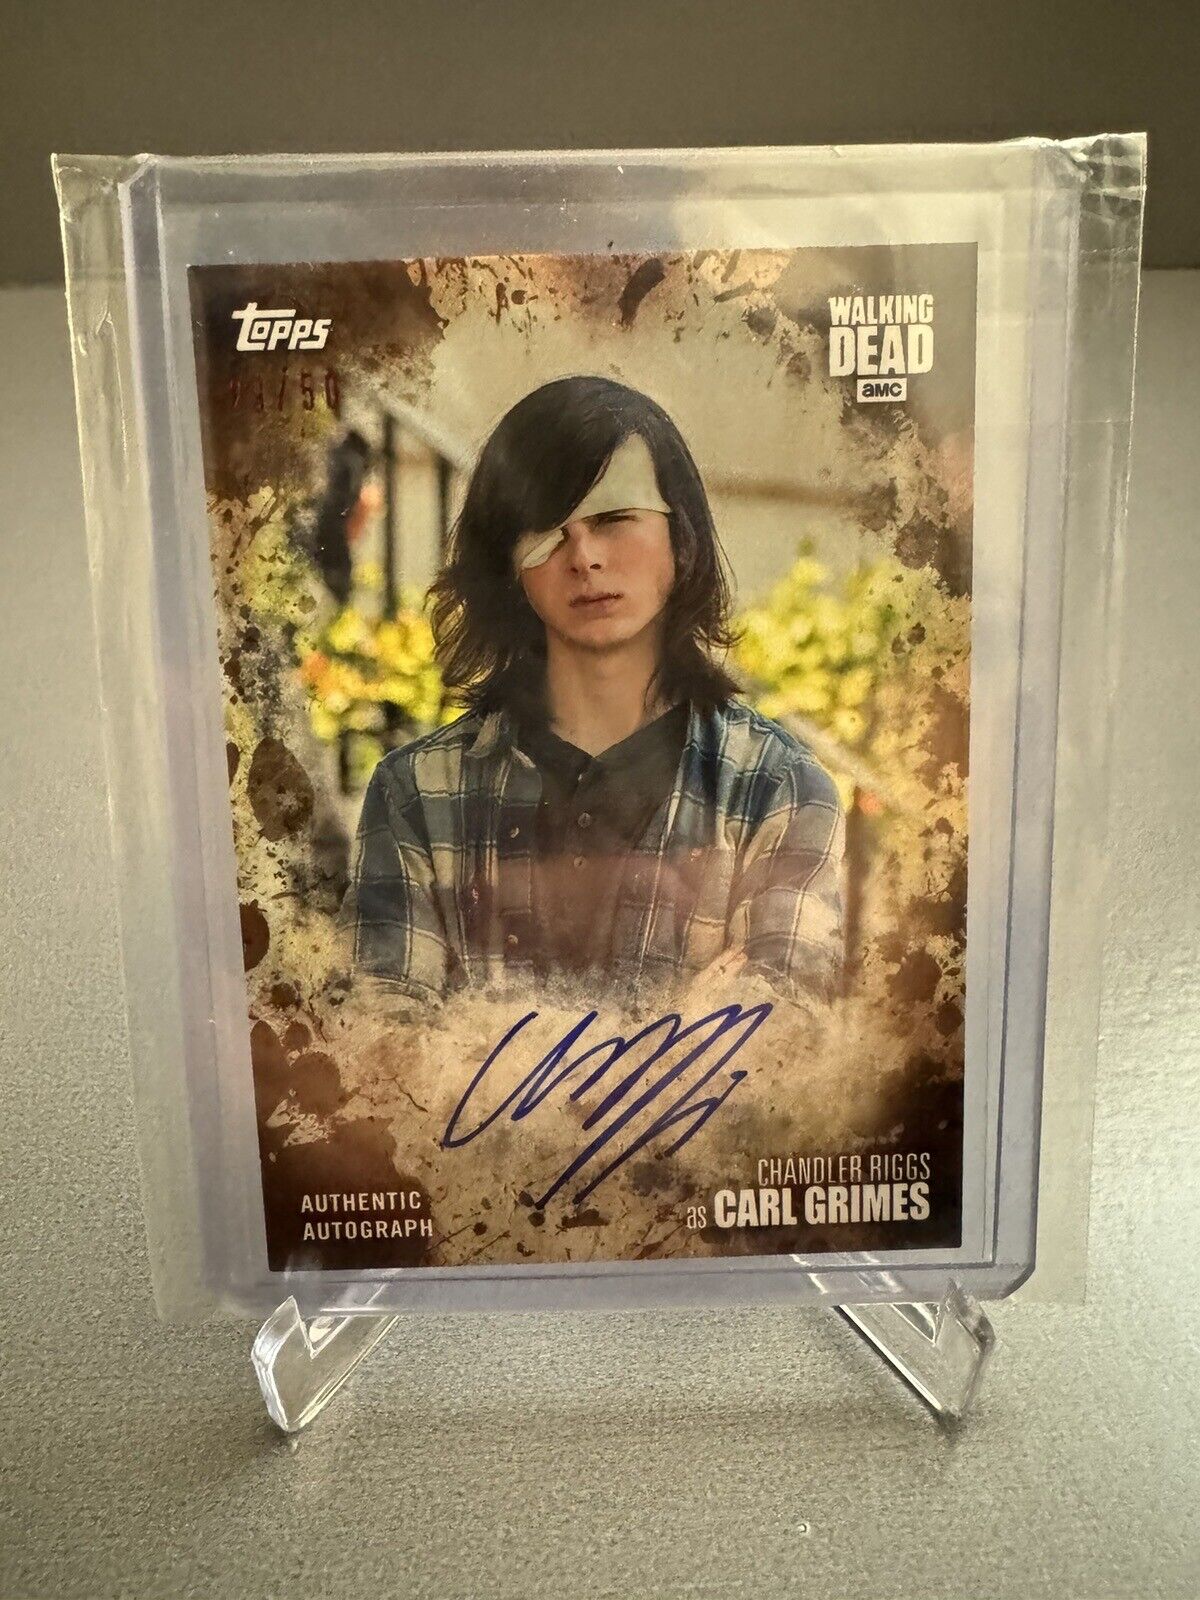 Topps The Walking Dead Season 7 Chandler Riggs (Carl) Autograph Card 29/50